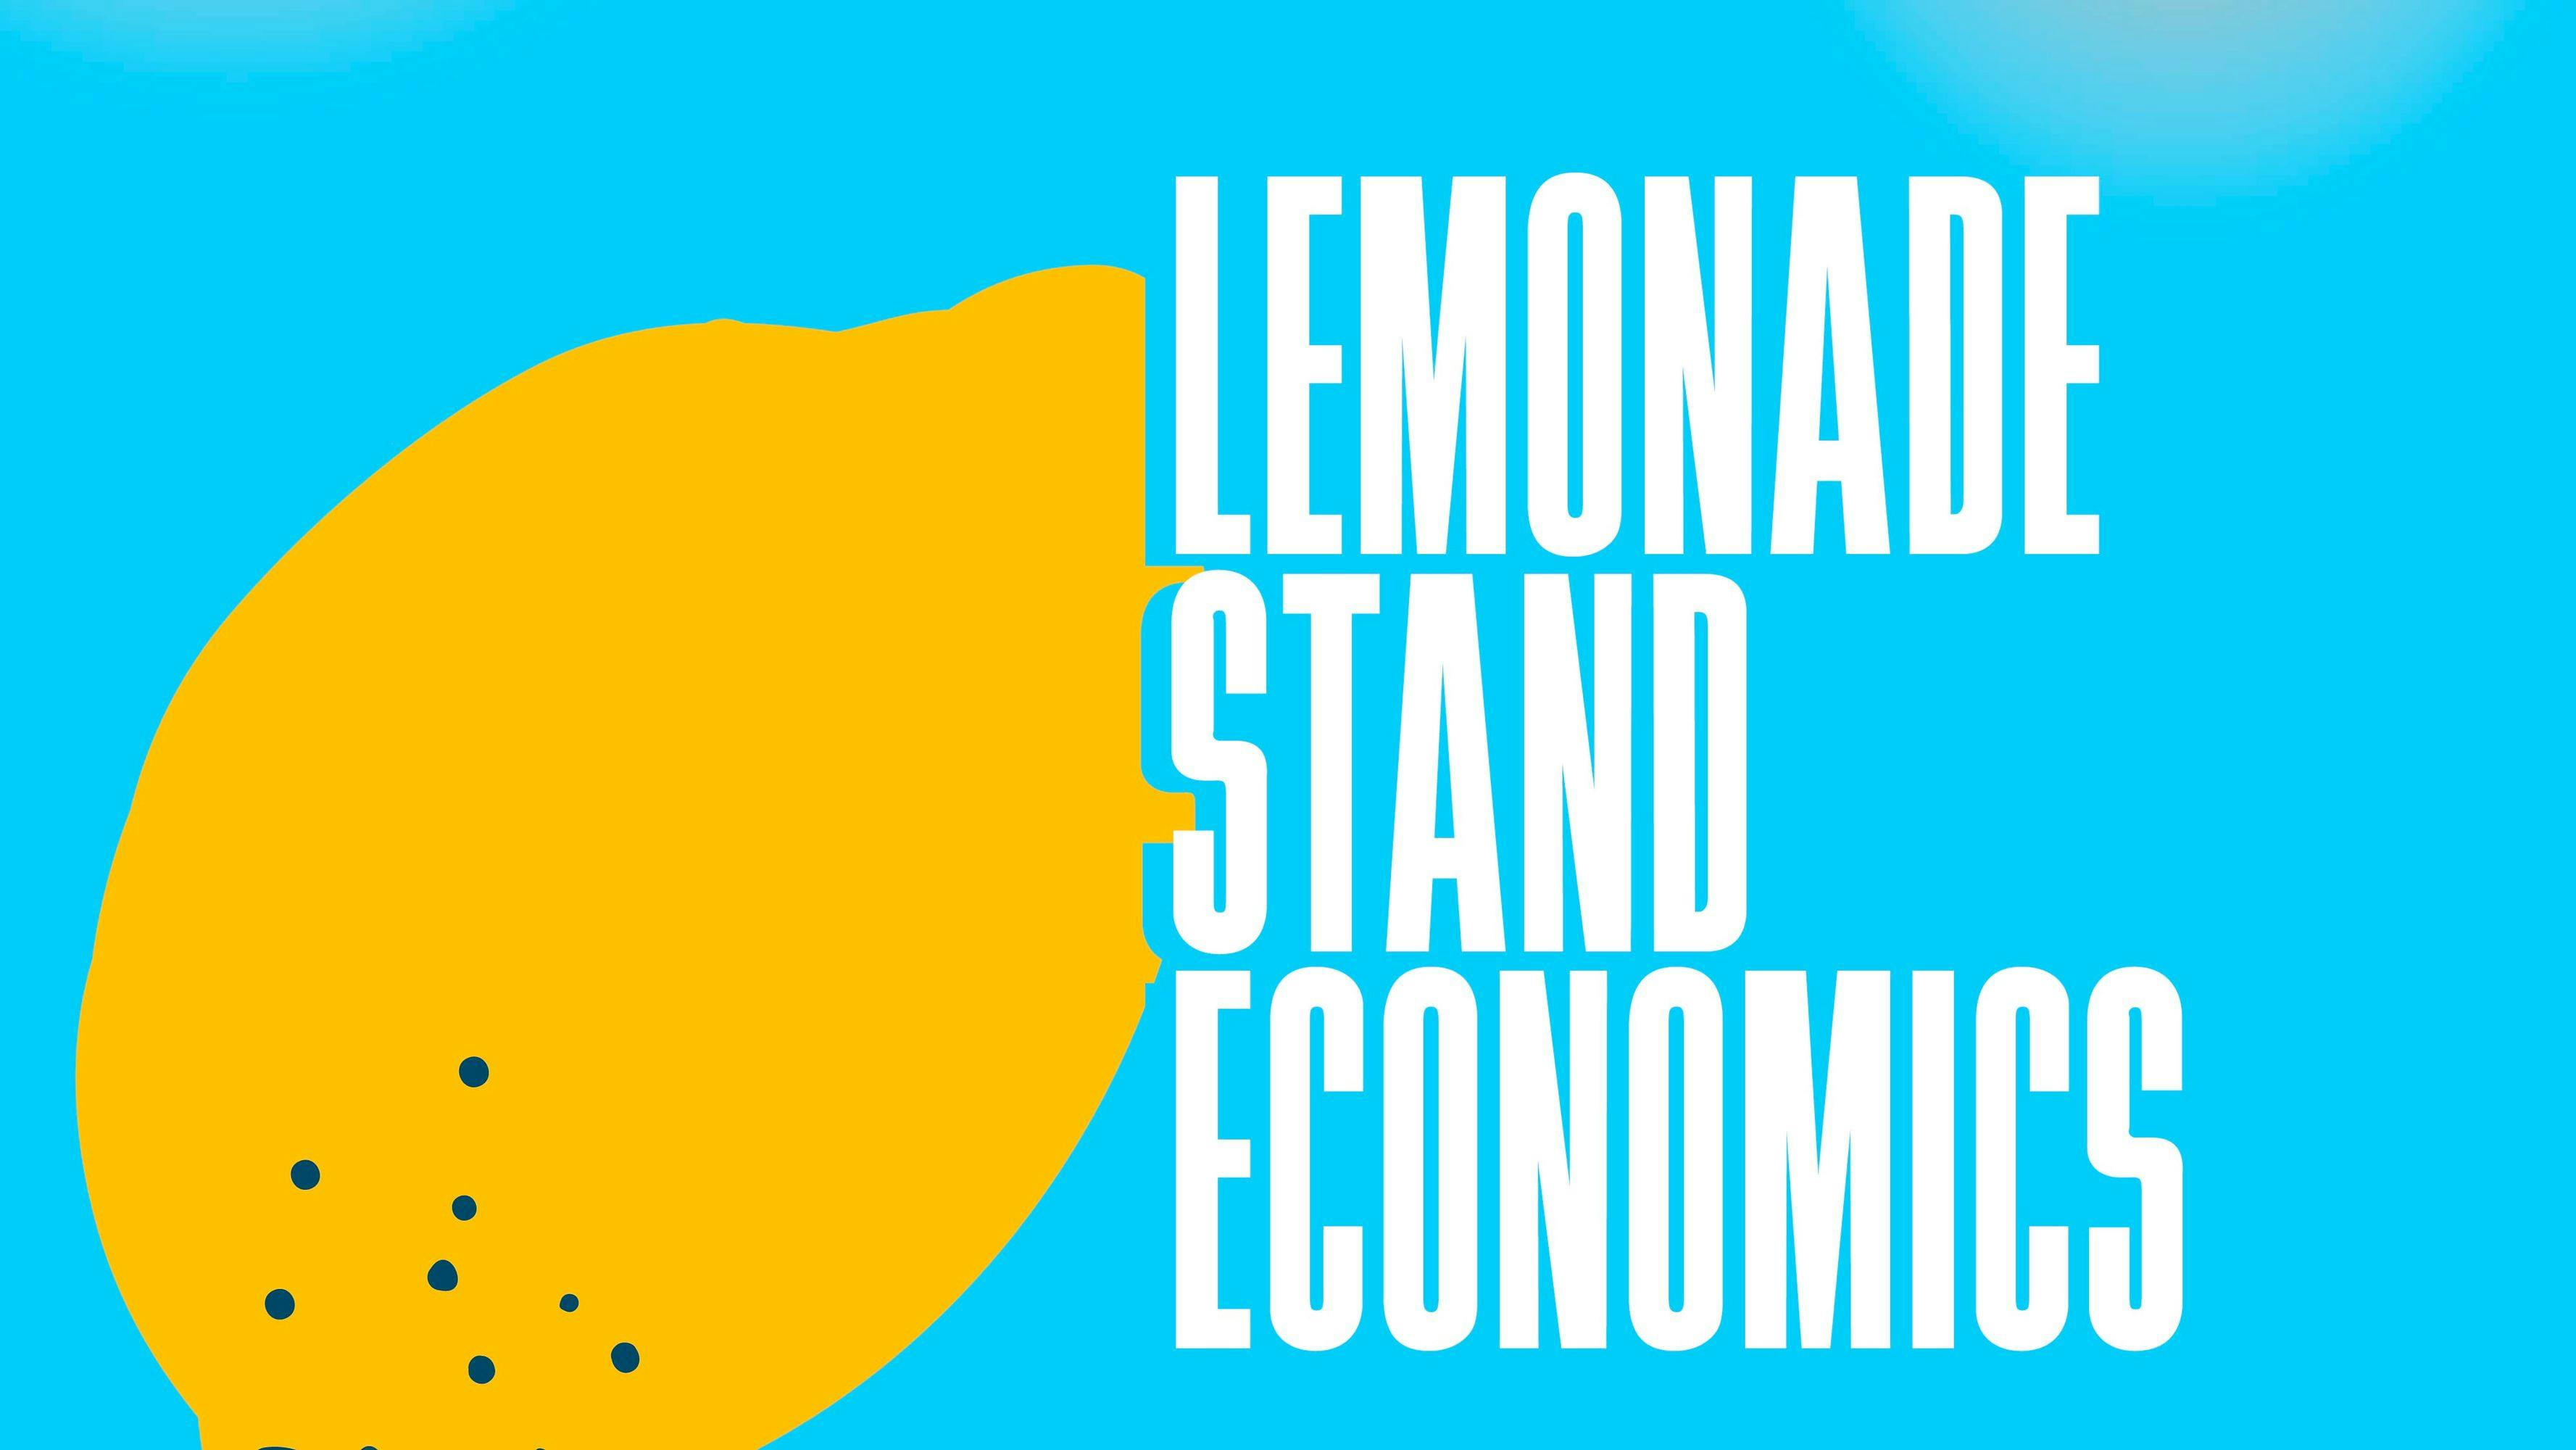 Lemonade Stand Economics